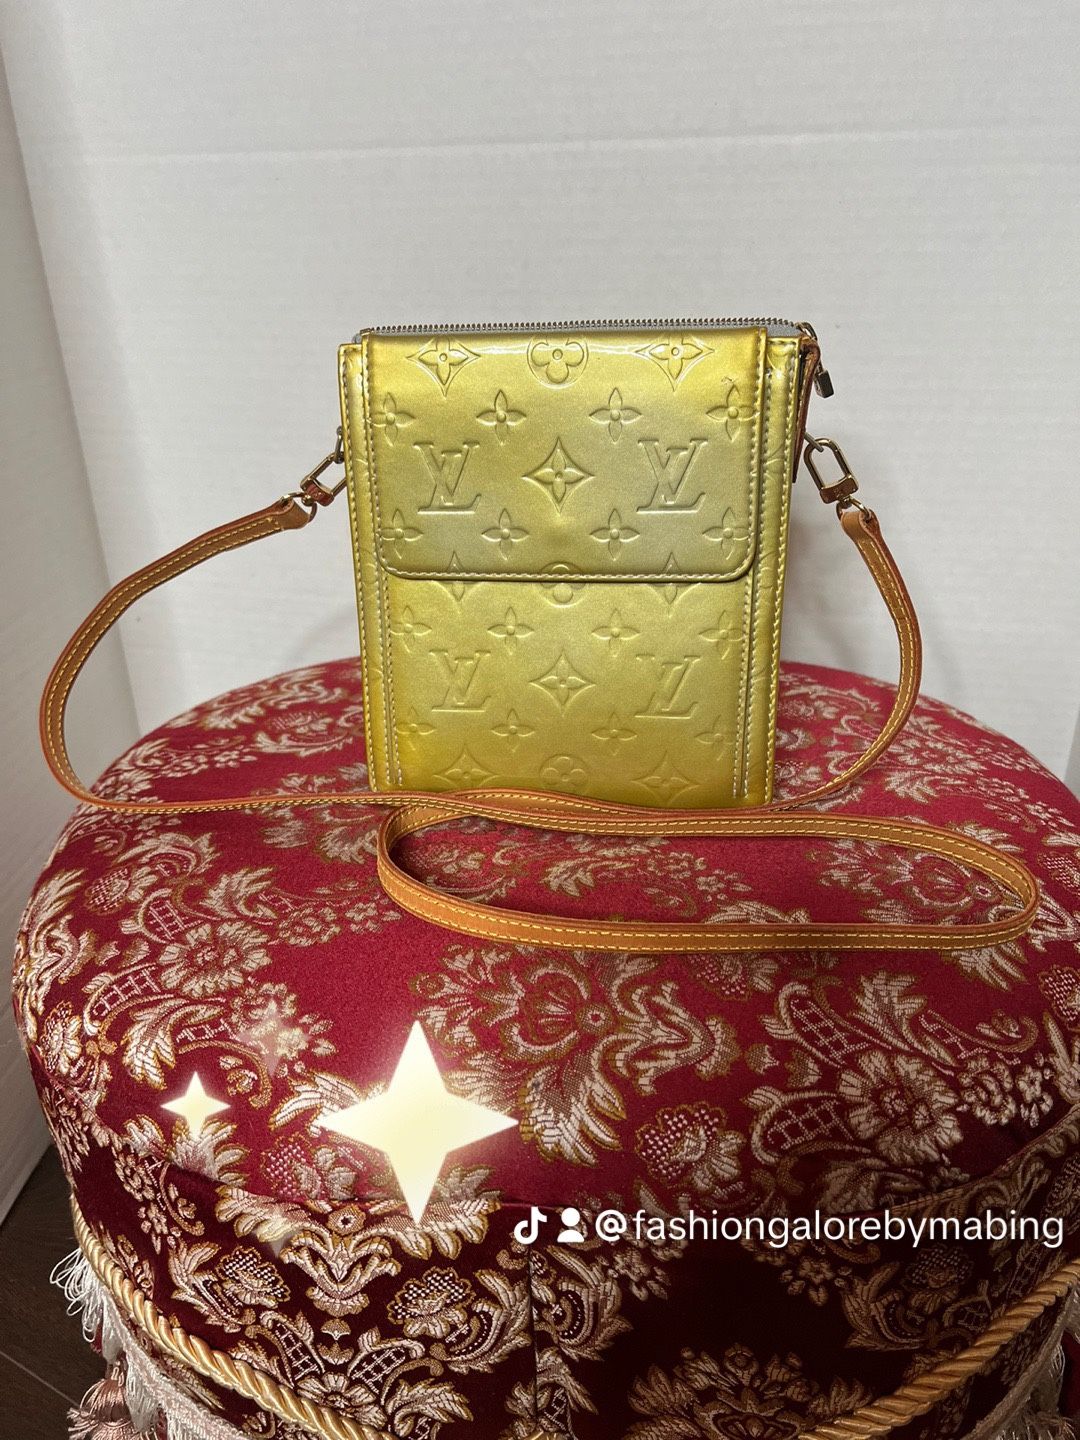 Authentic Louis Vuitton Vernis Crossbody~Handbag for Sale in